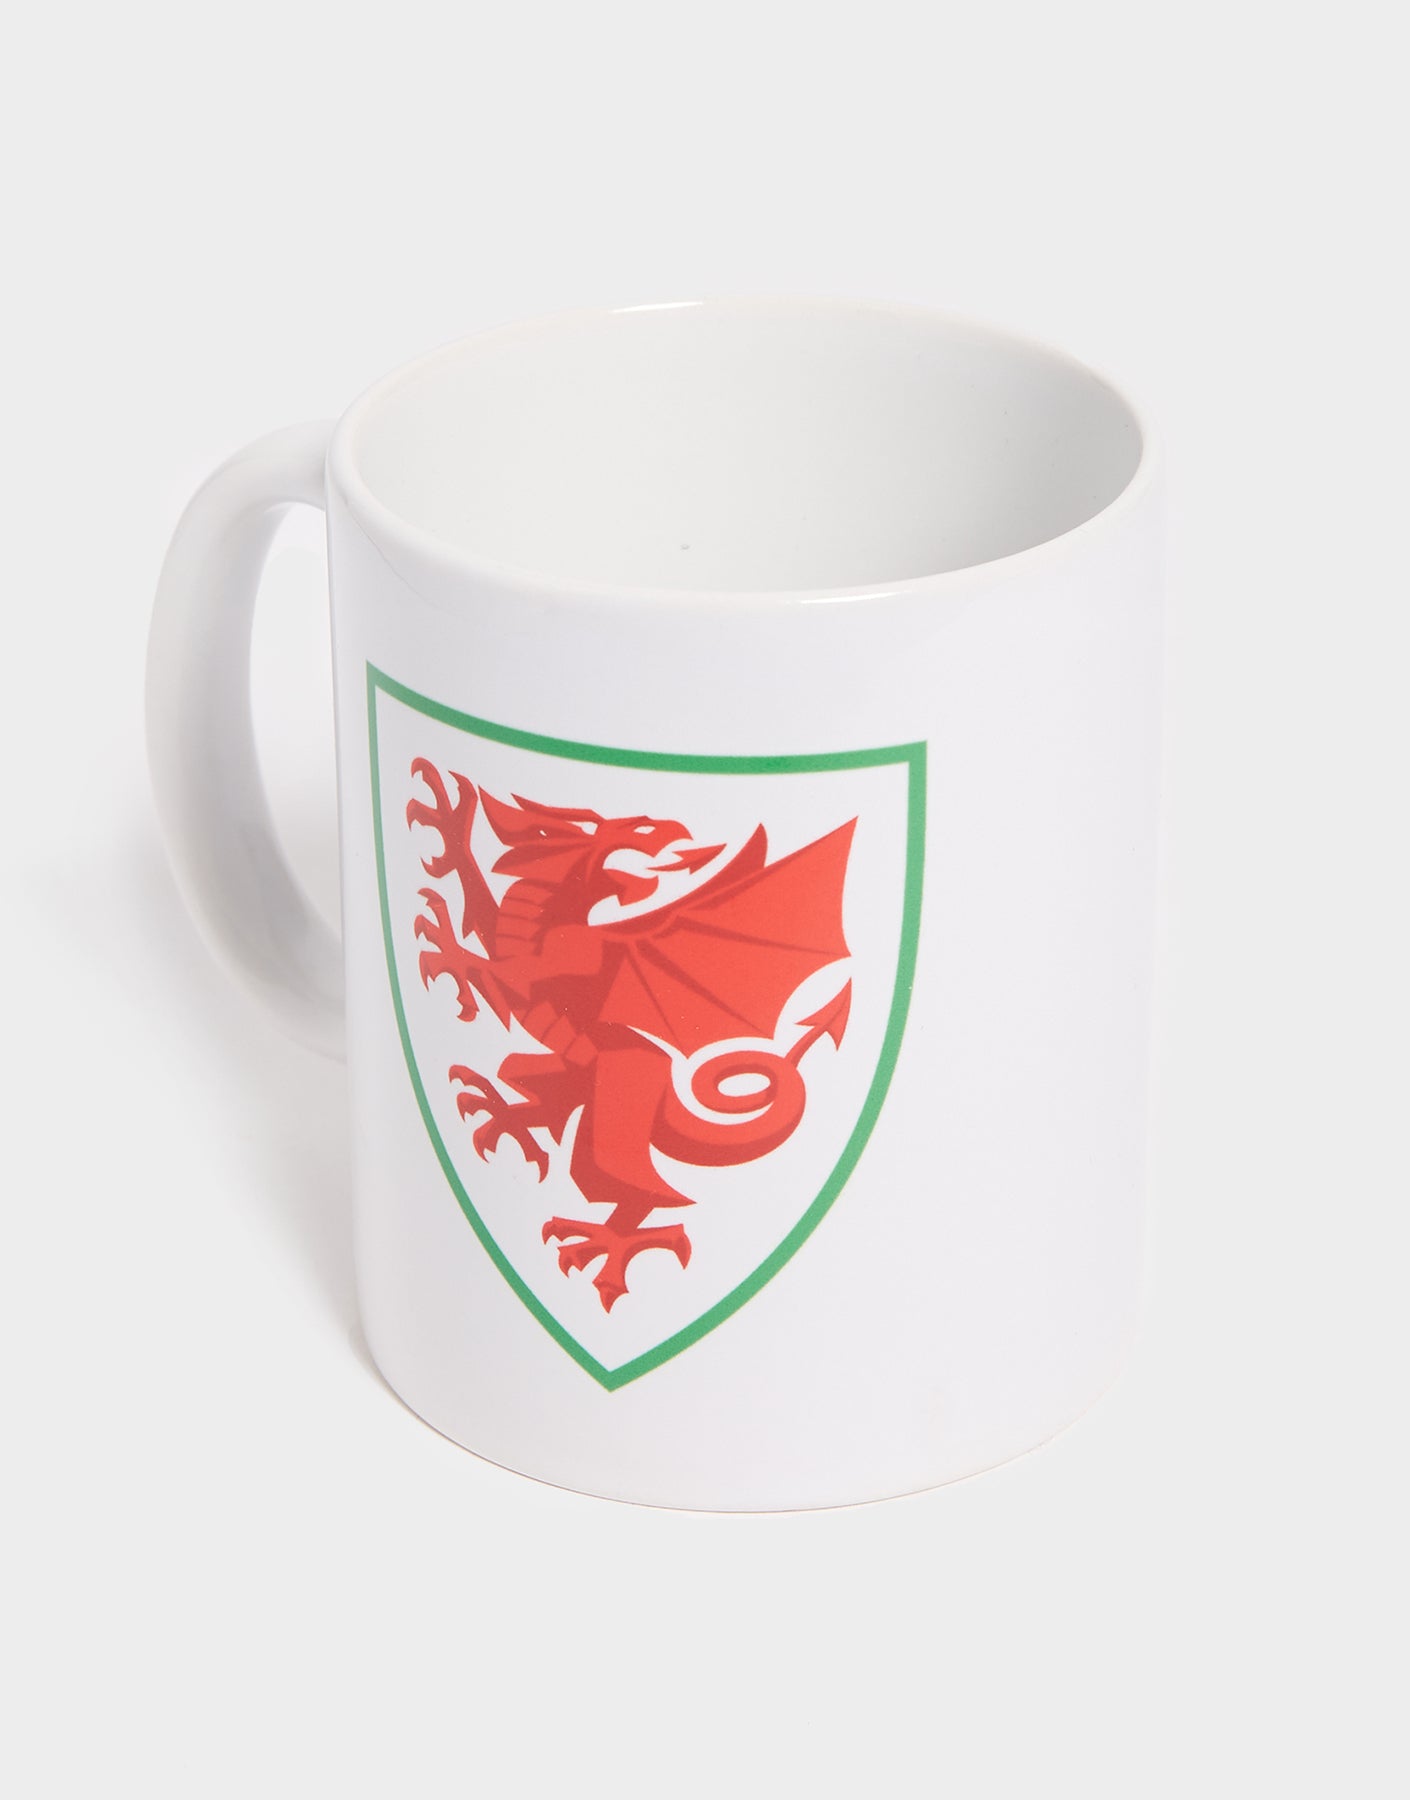 Official Team Wales Badge Mug